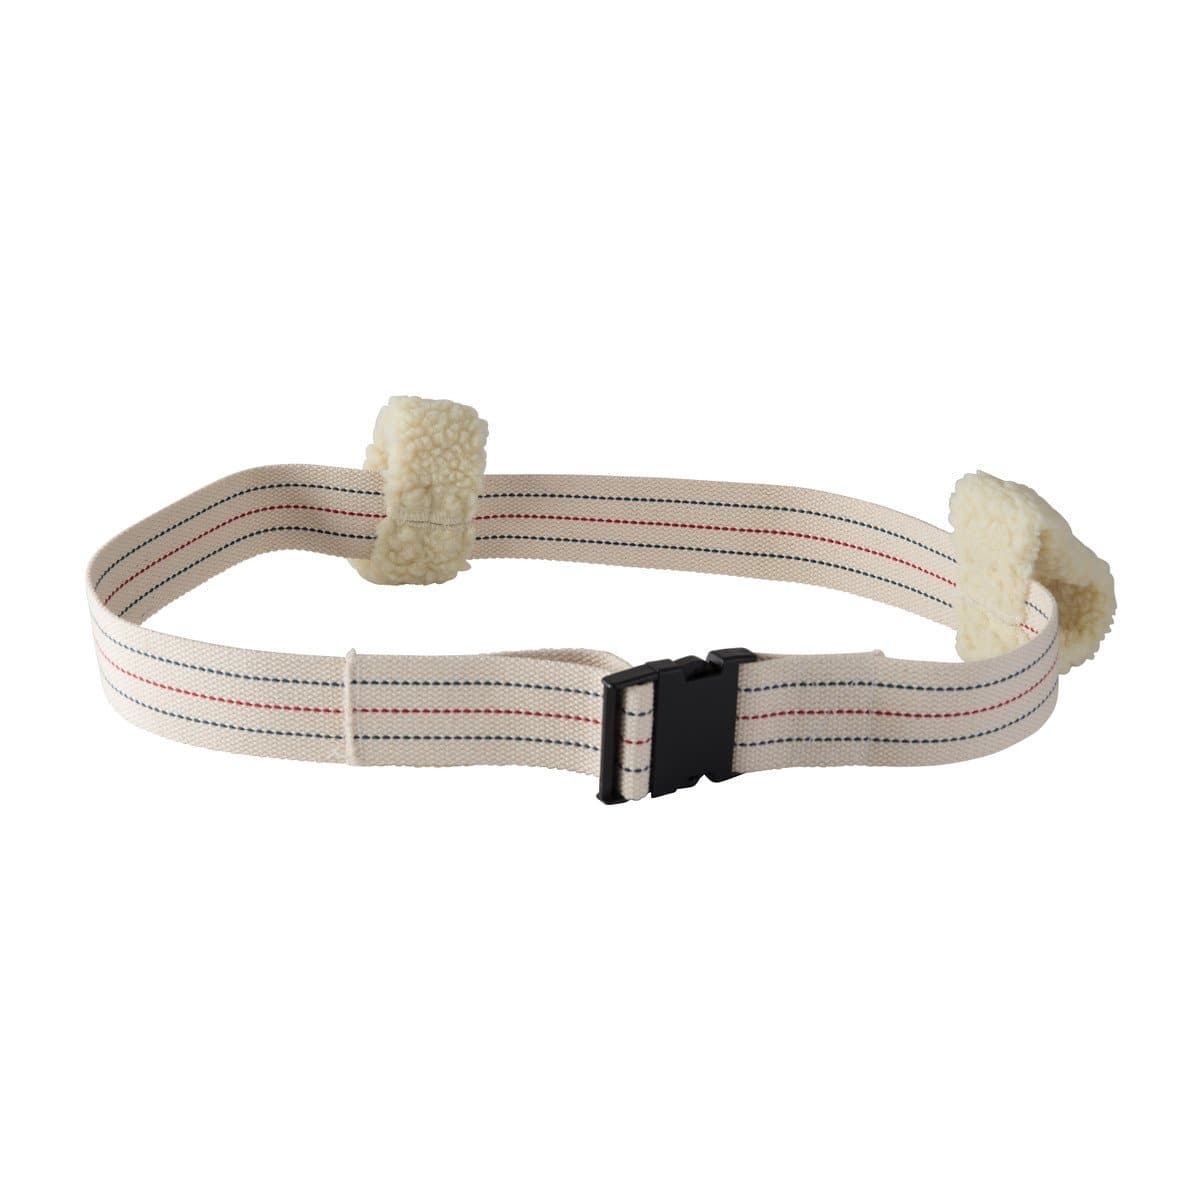 DMI® Ambulation Gait Belt with Soft Handle Options - Senior.com Gait Belts